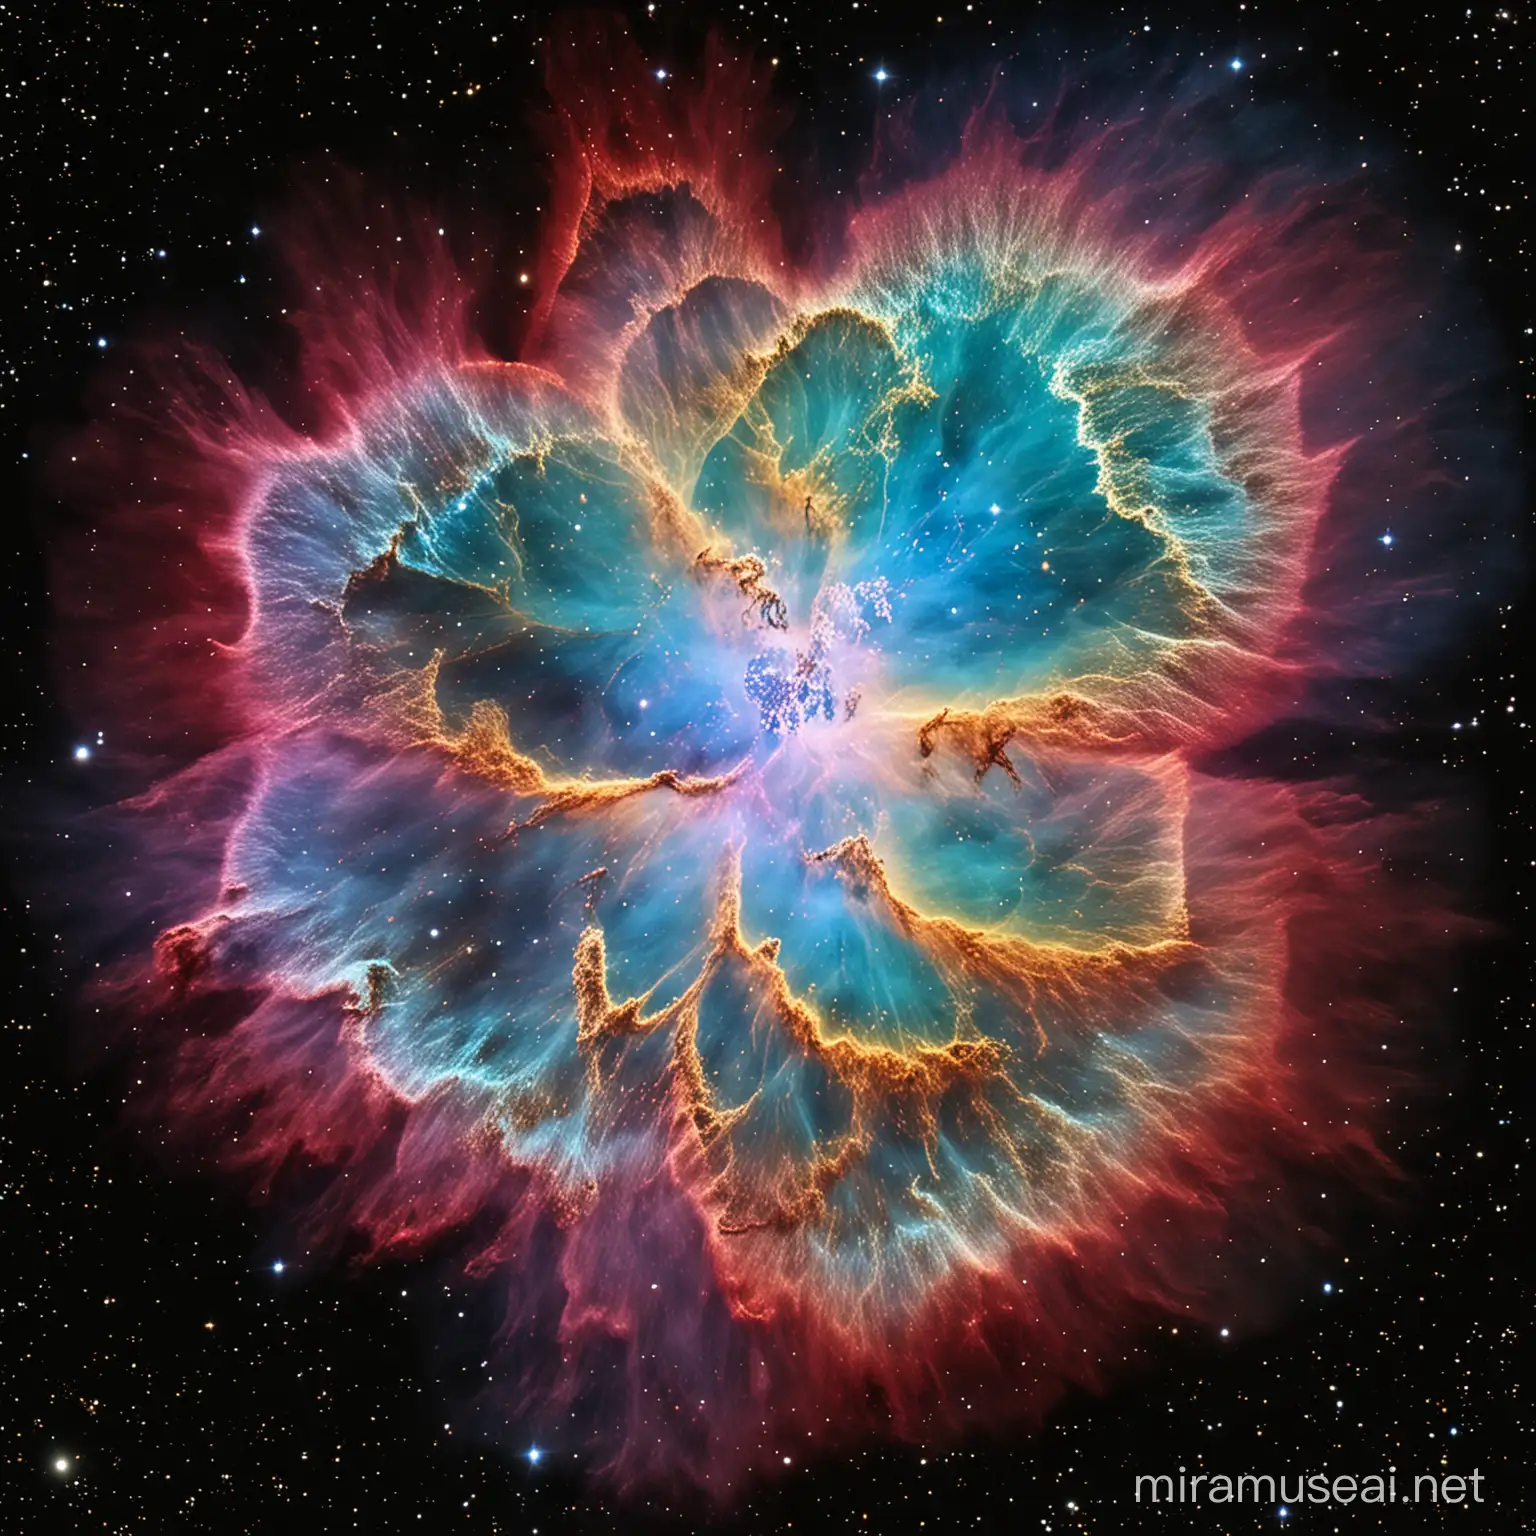 Stellar Eruption Dynamic Crab Nebula in Dazzling Colors